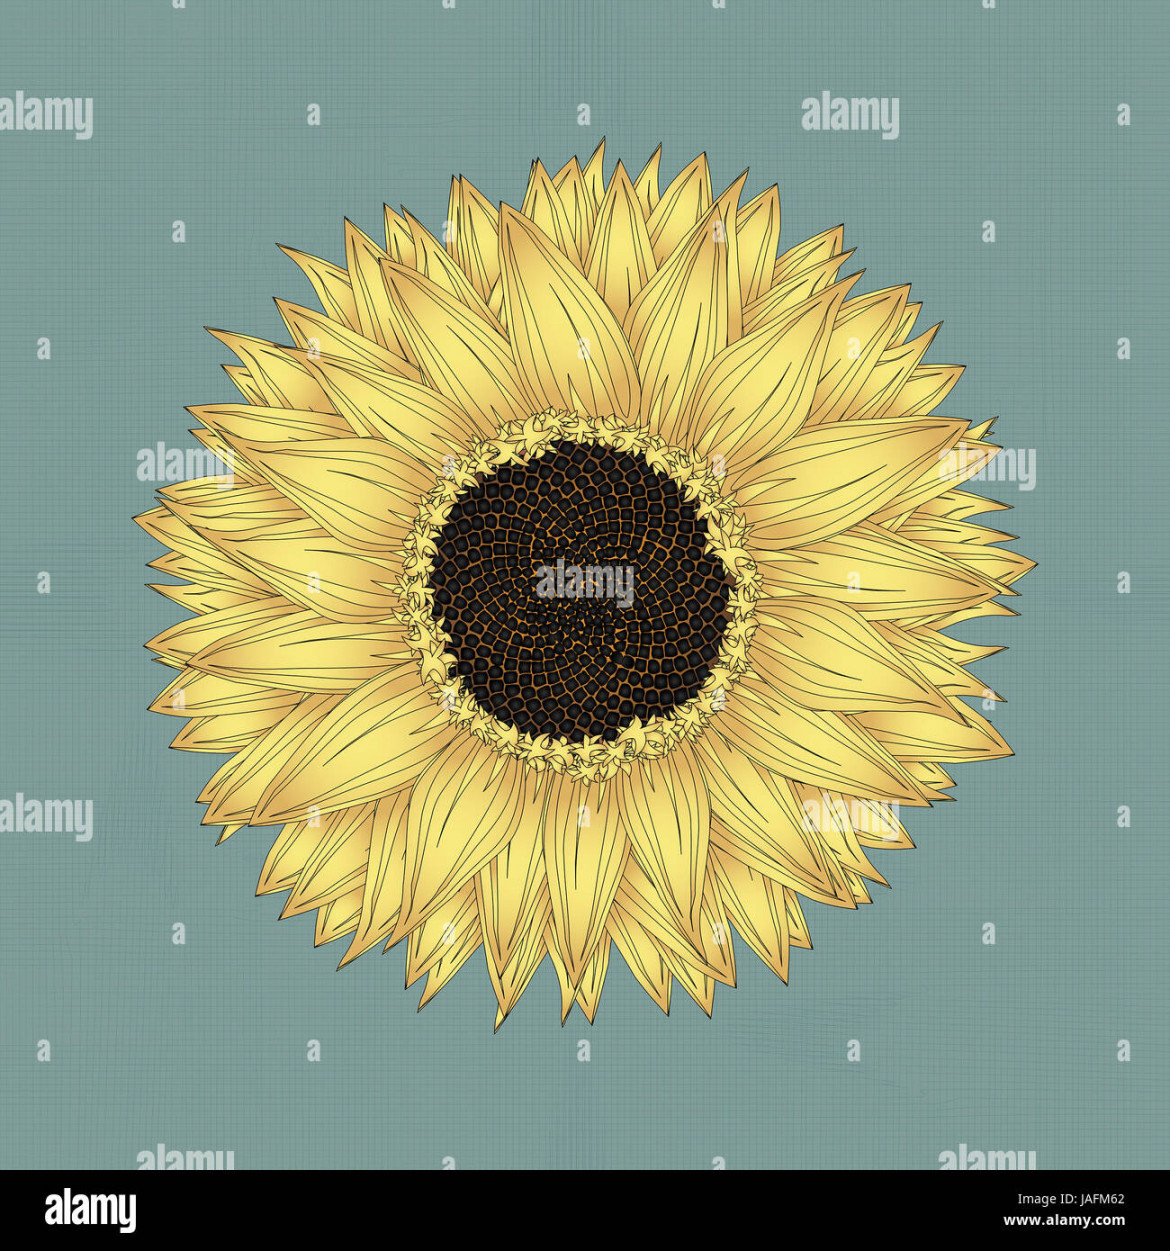 Sunflower drawing, grunge background sketch Stock Photo - Alamy